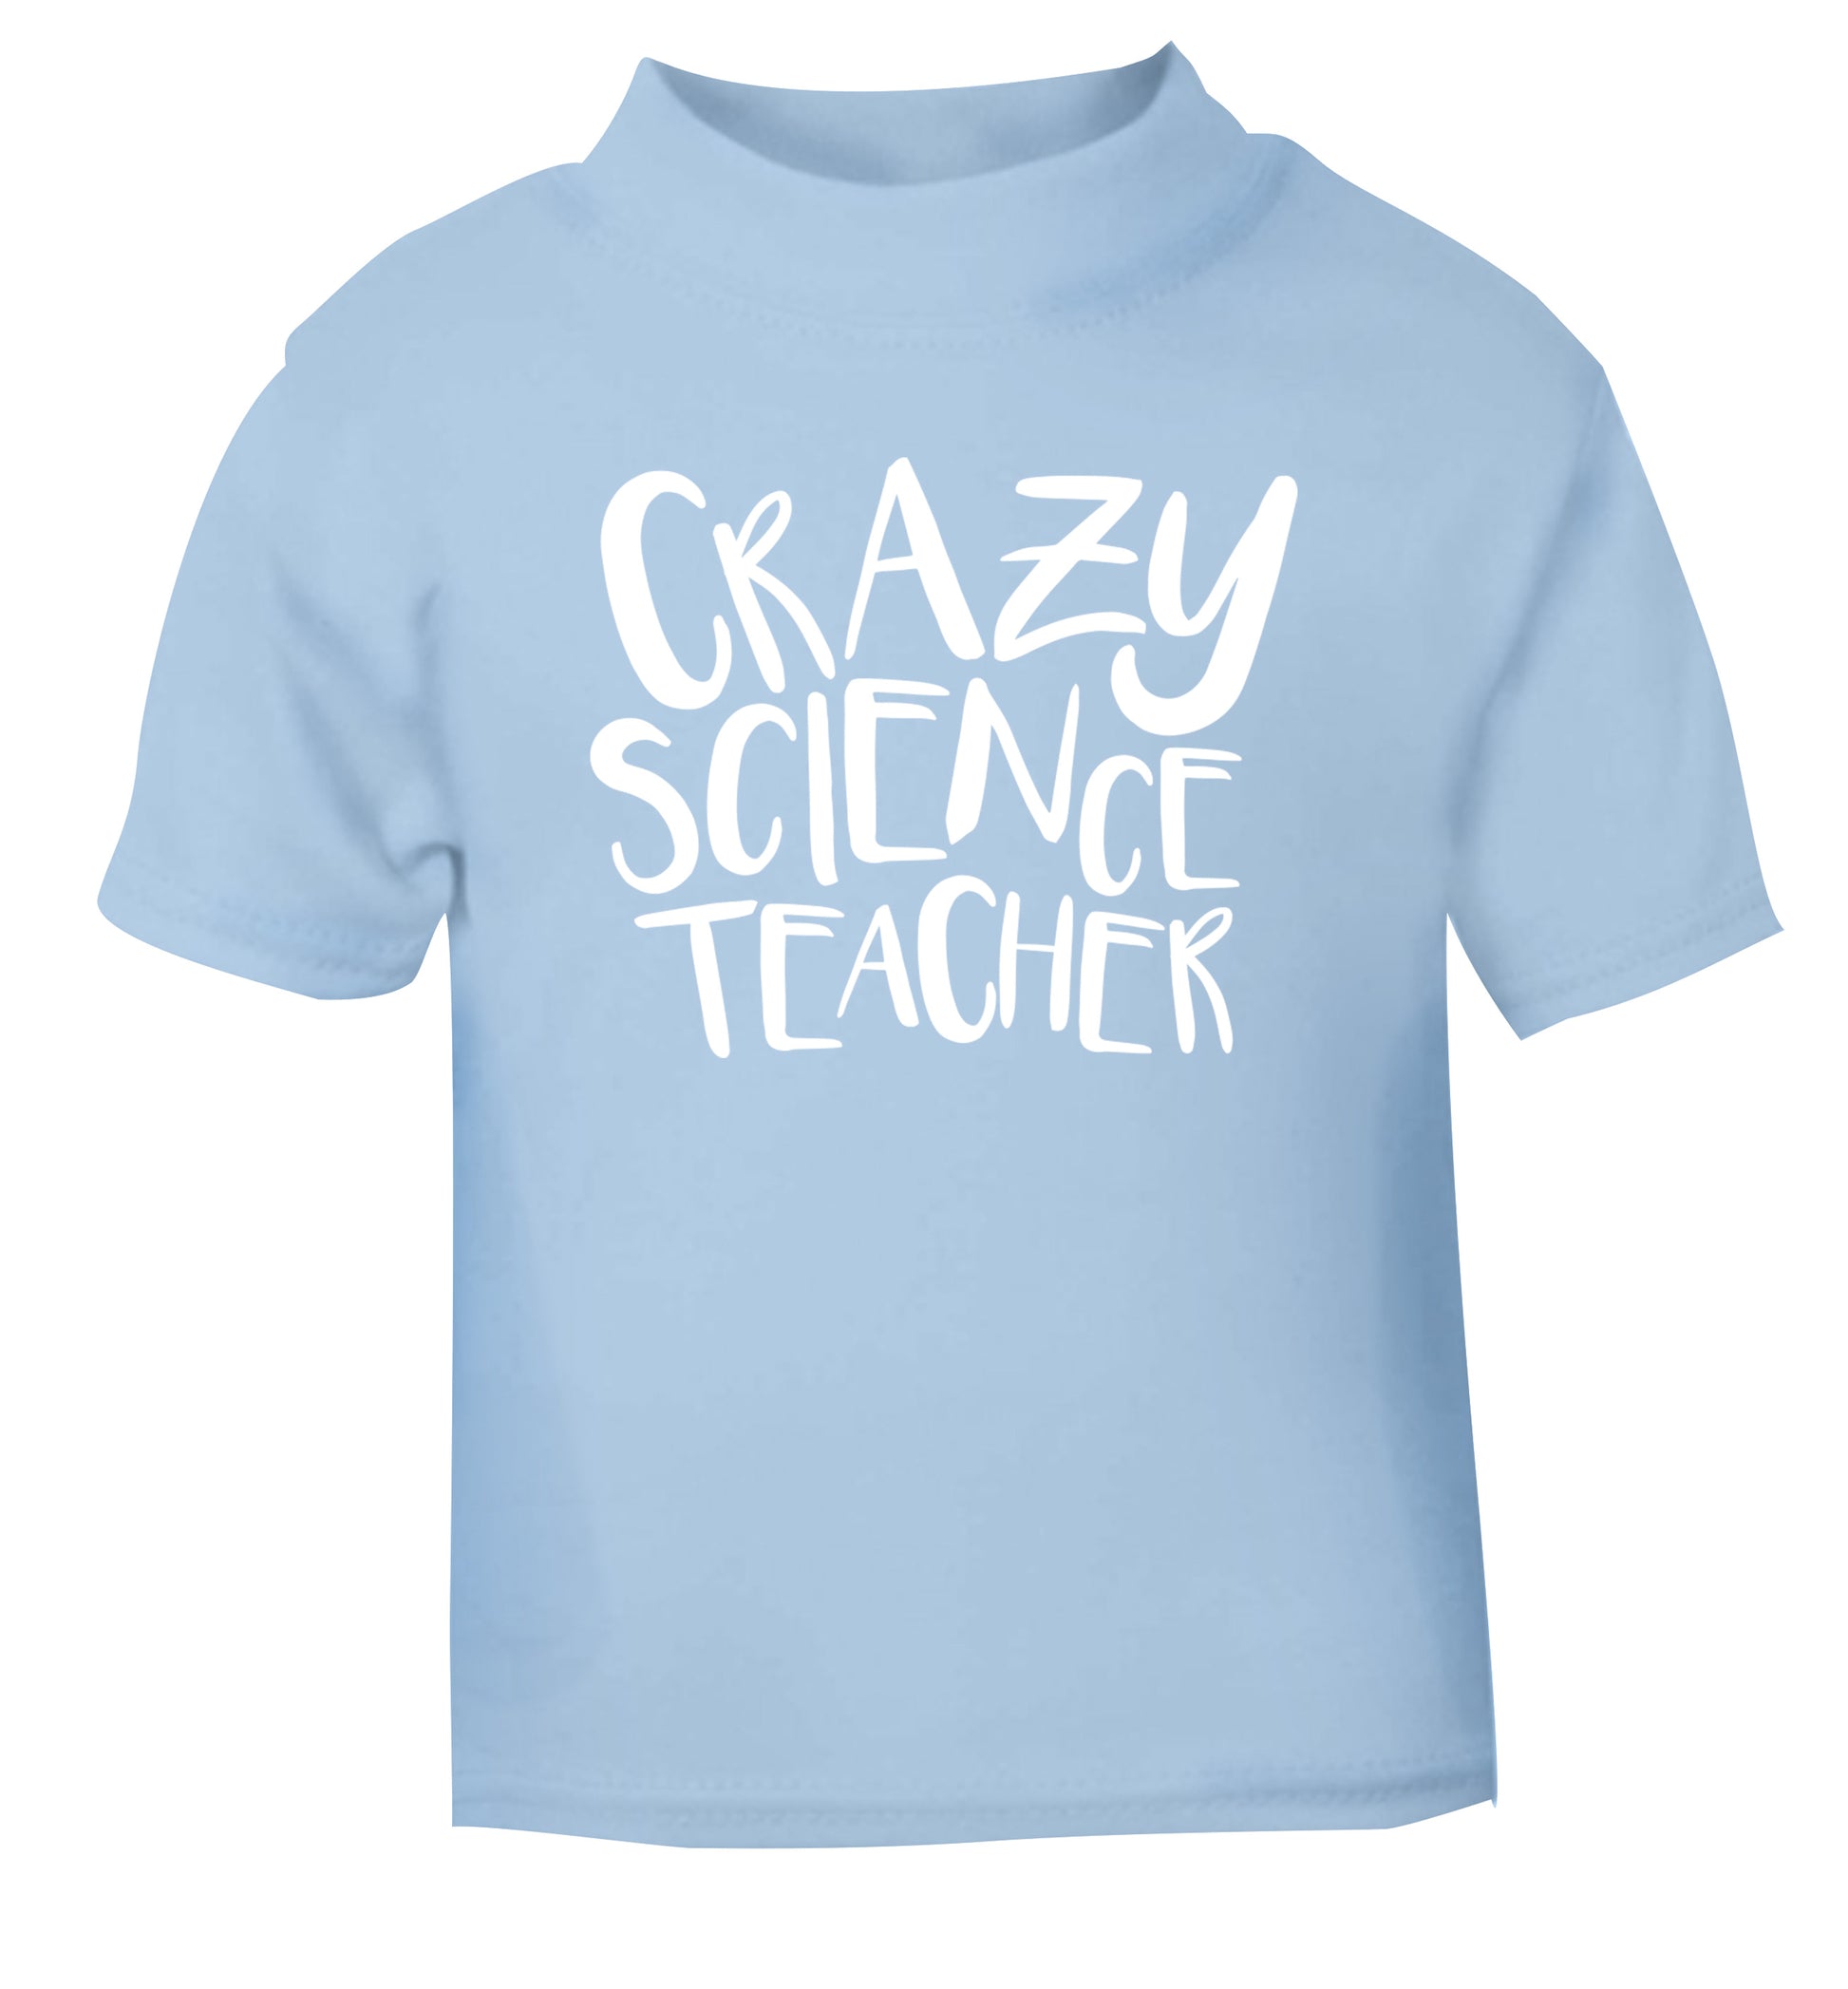 Crazy science teacher light blue Baby Toddler Tshirt 2 Years